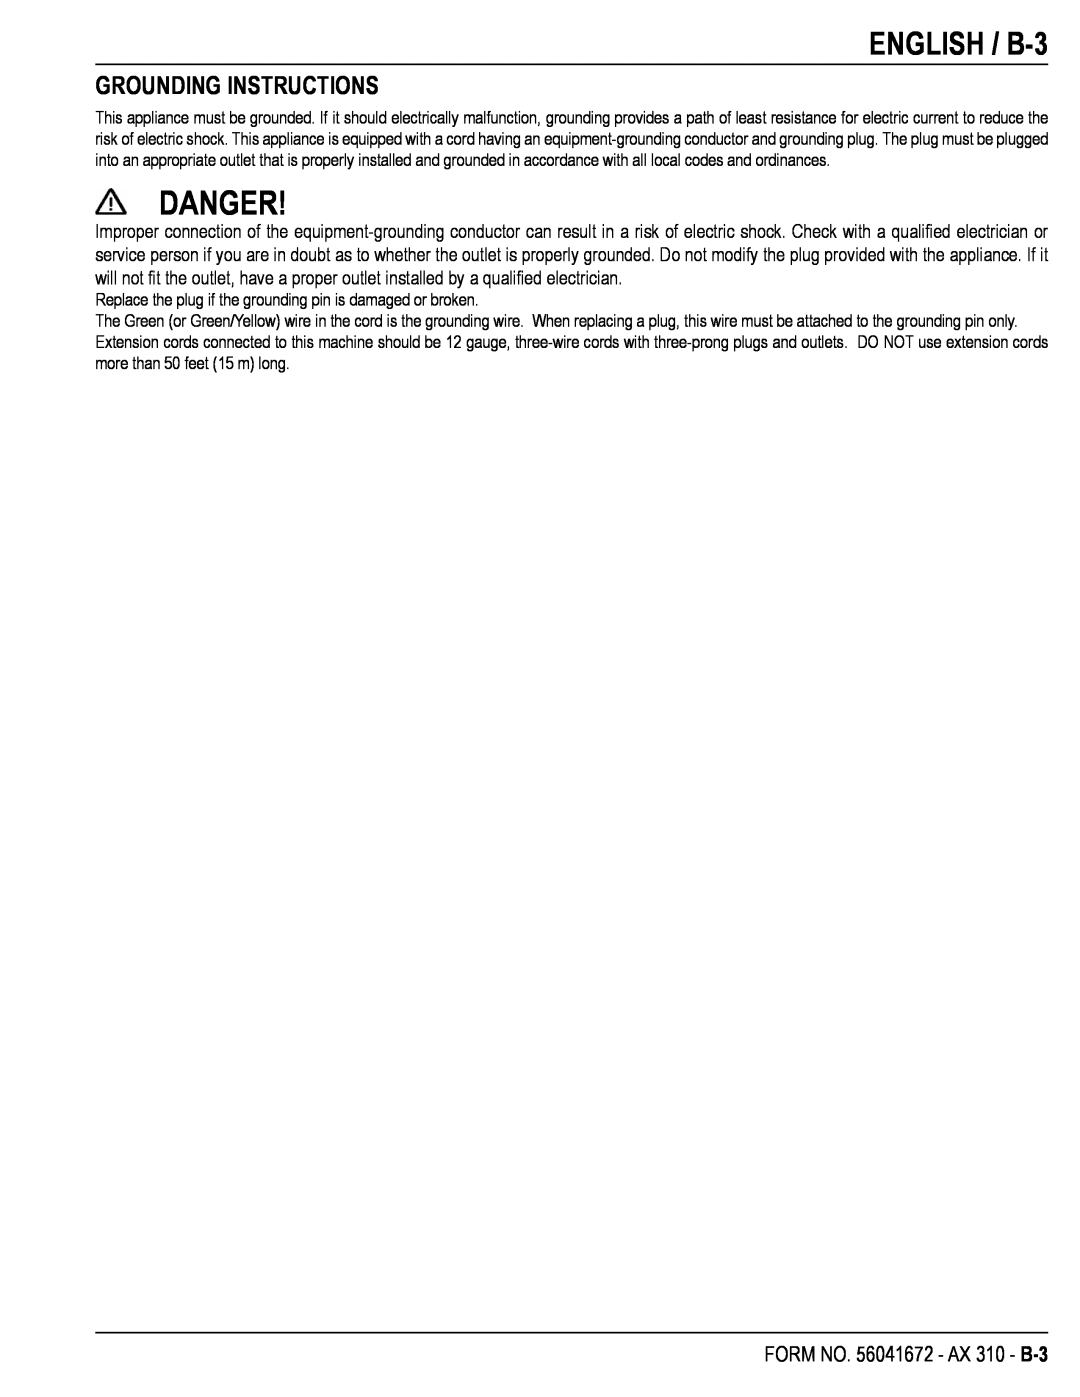 Nilfisk-Advance America manual Danger, ENGLISH / B-3, Grounding Instructions, FORM NO. 56041672 - AX 310 - B-3 